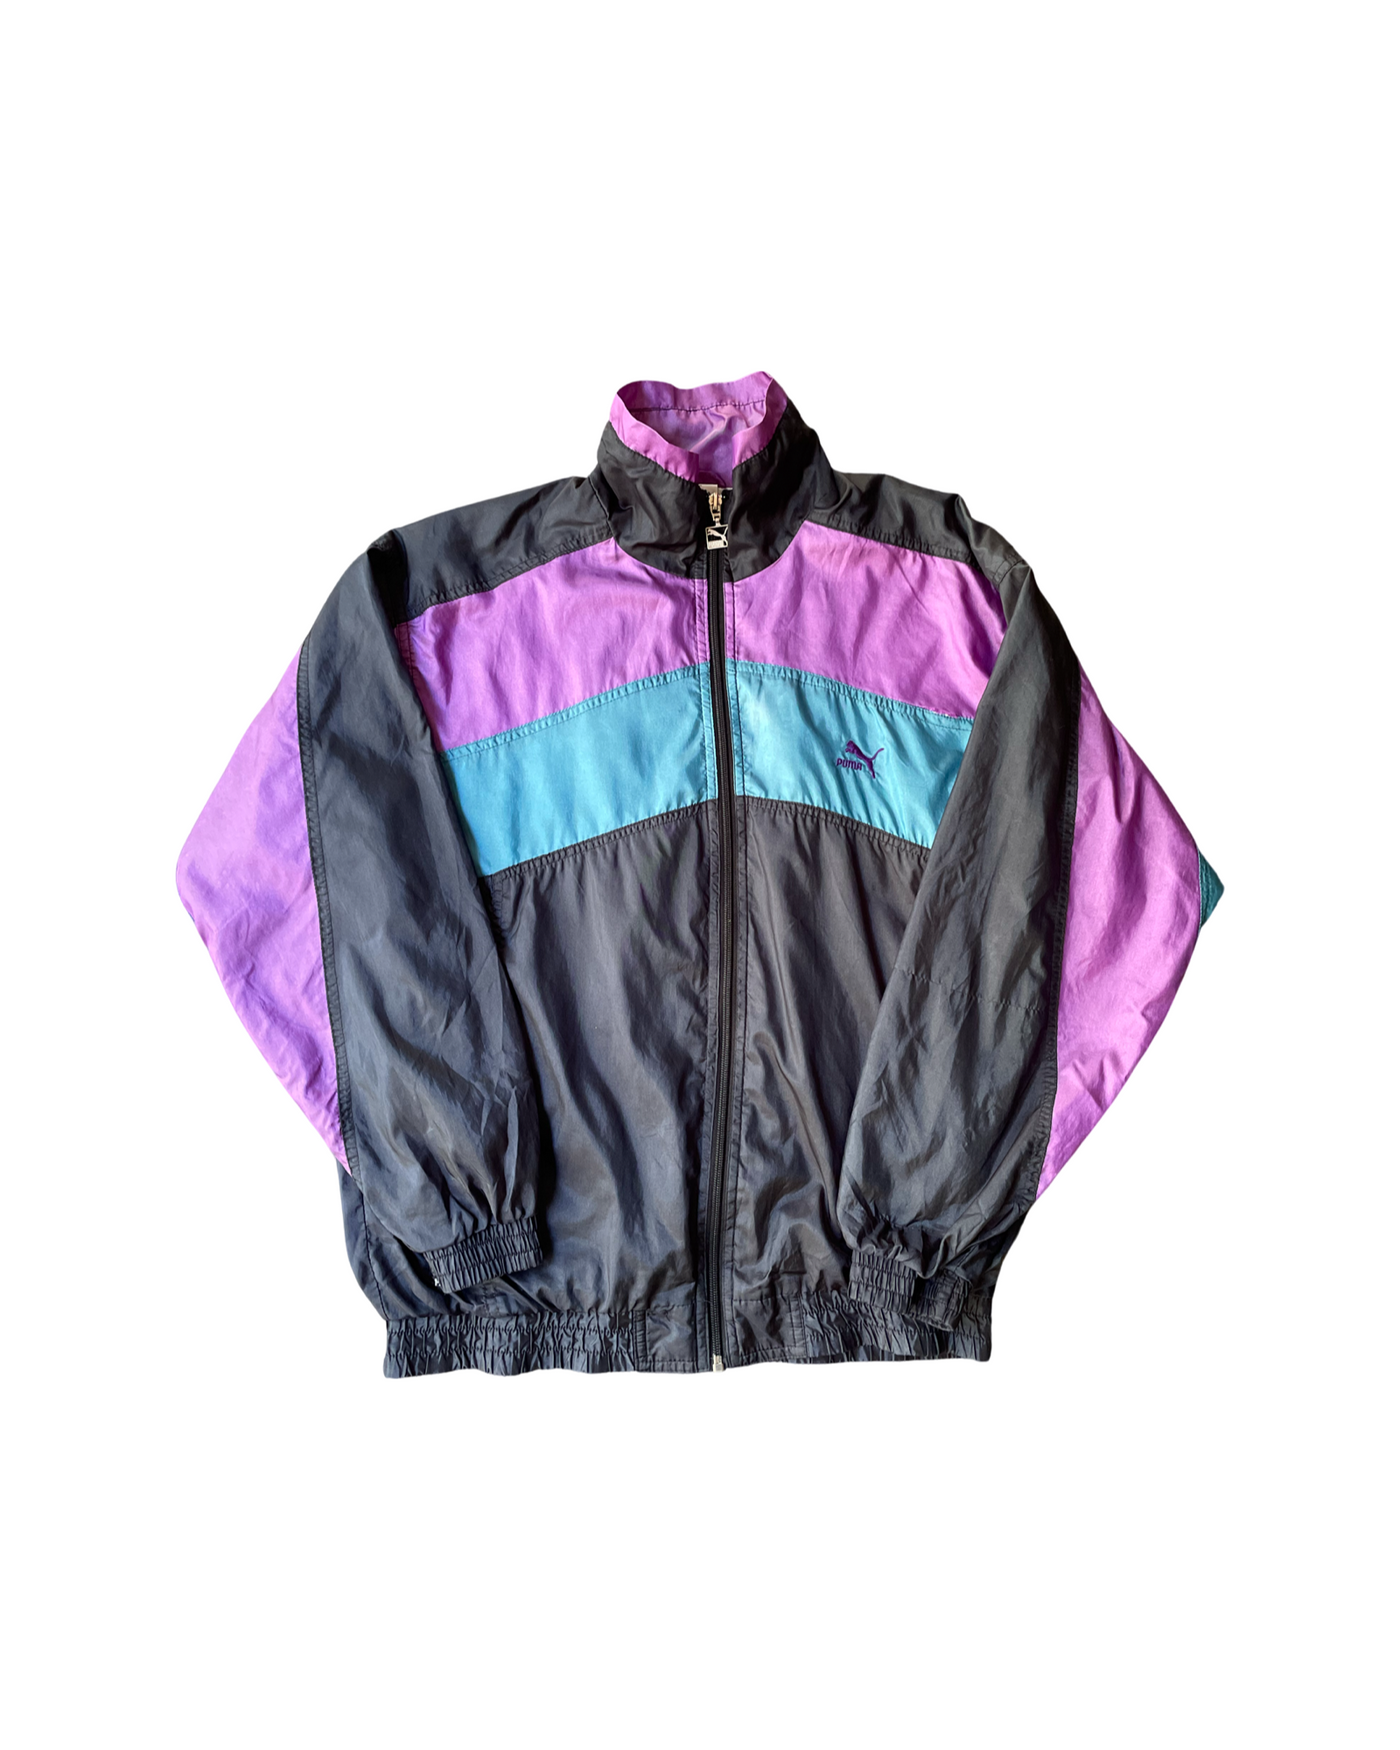 Vintage 90’s Puma Parachute jacket